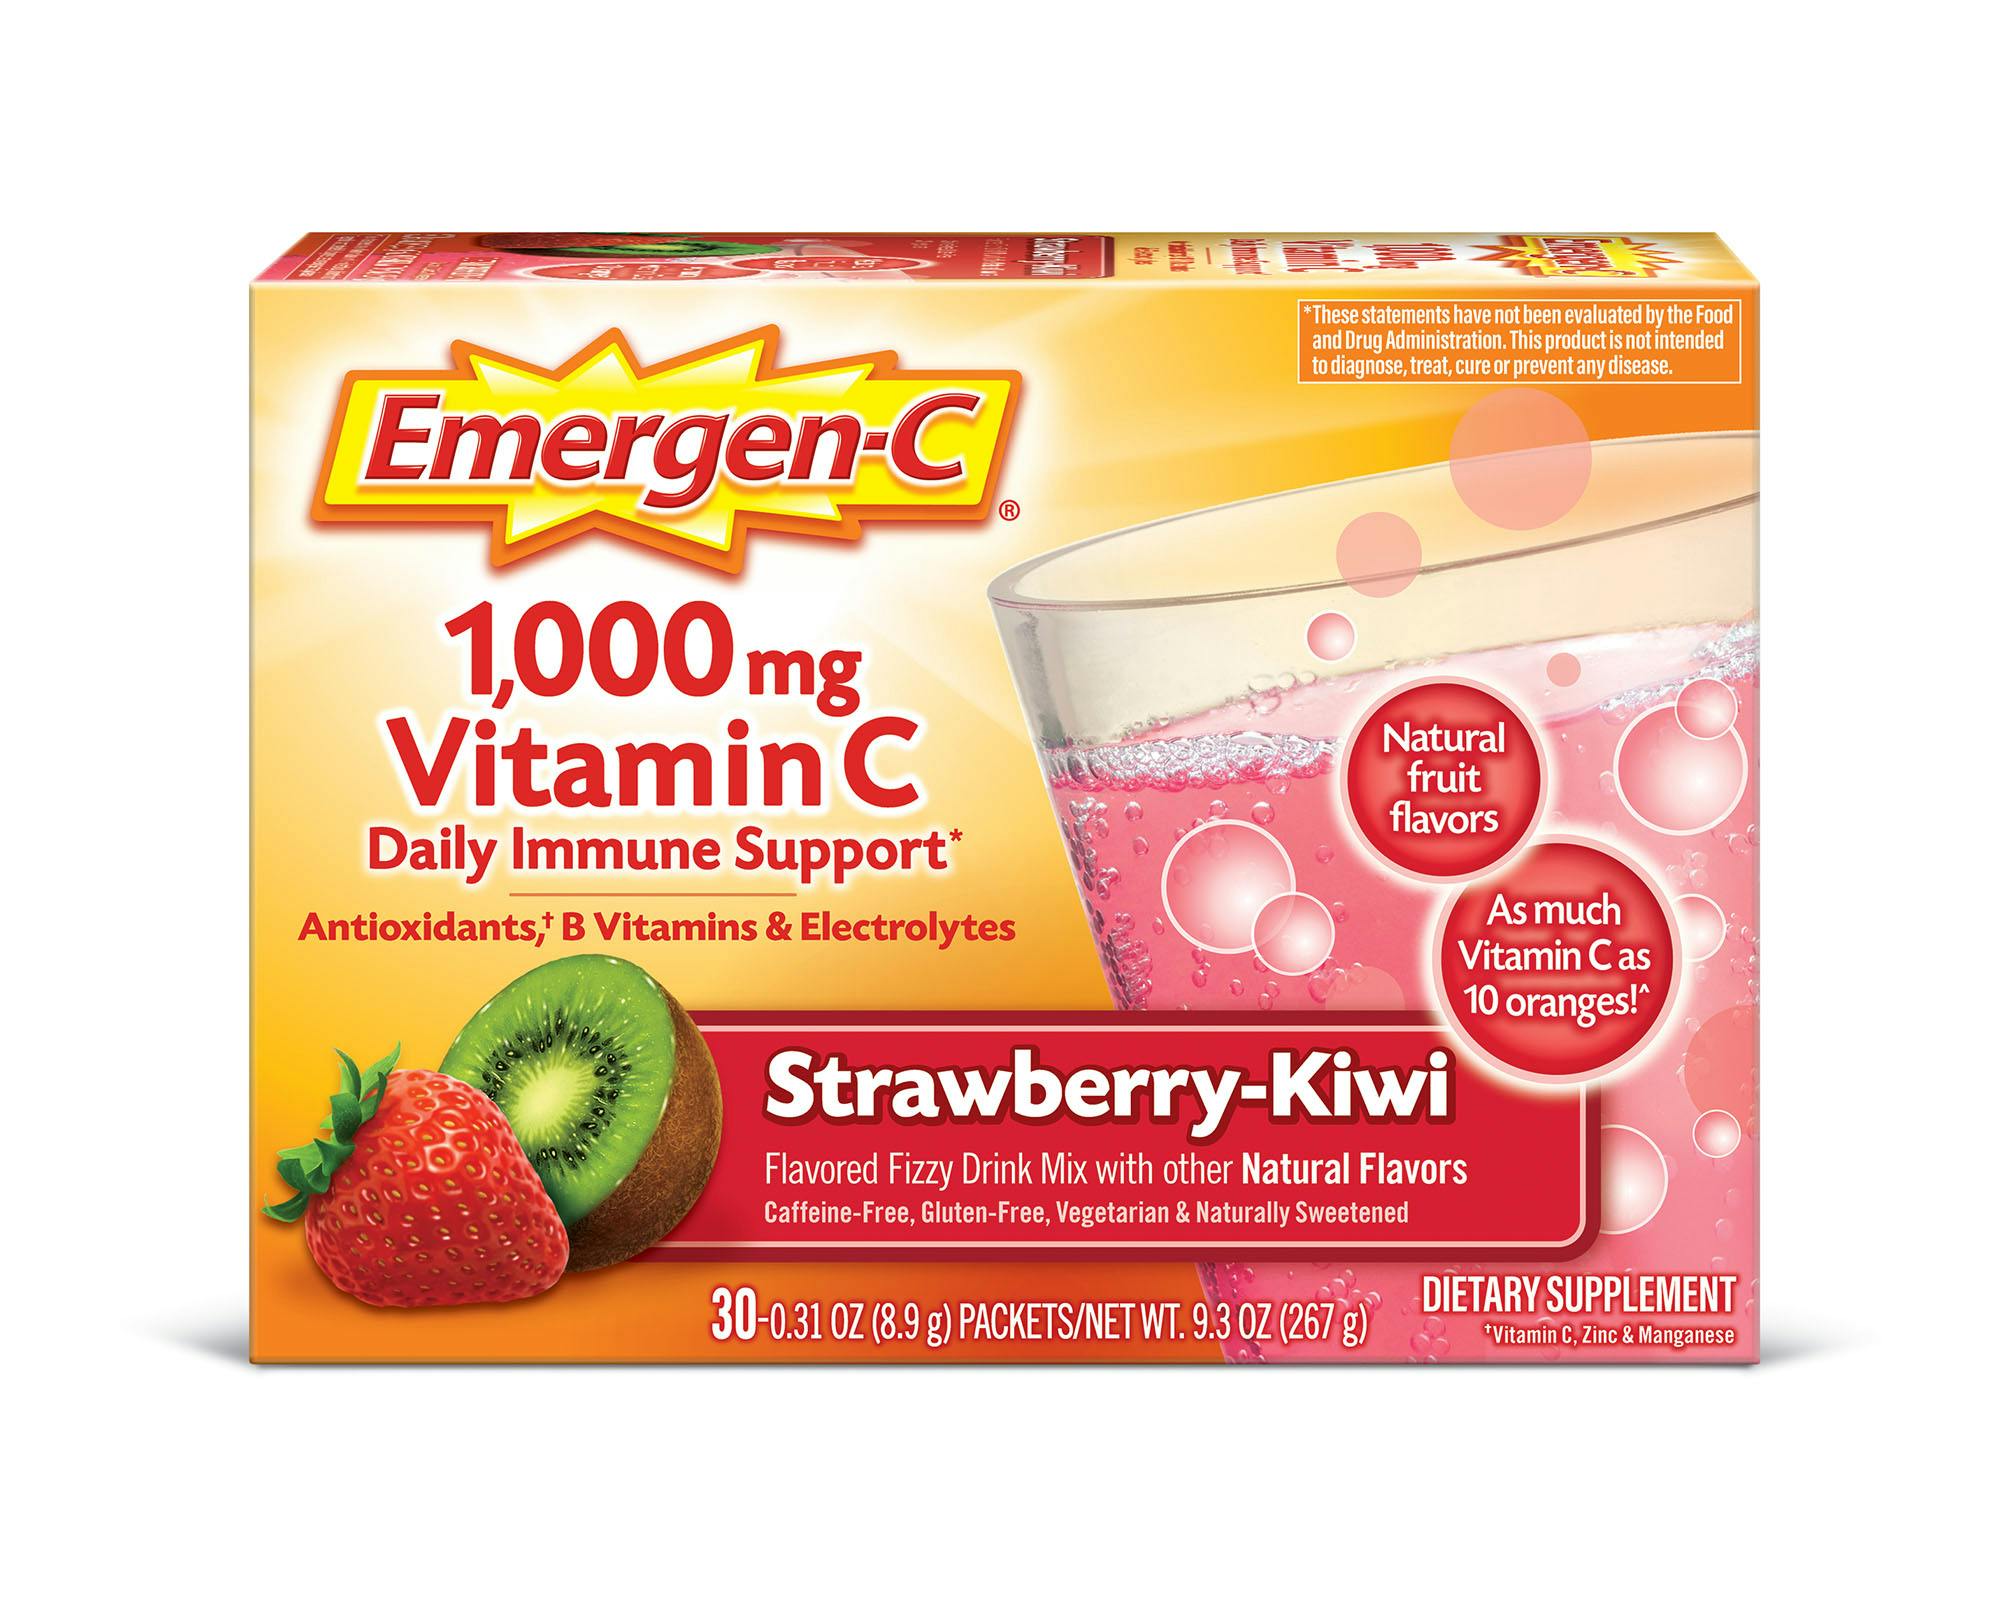 Strawberry-Kiwi Original Immune Support box